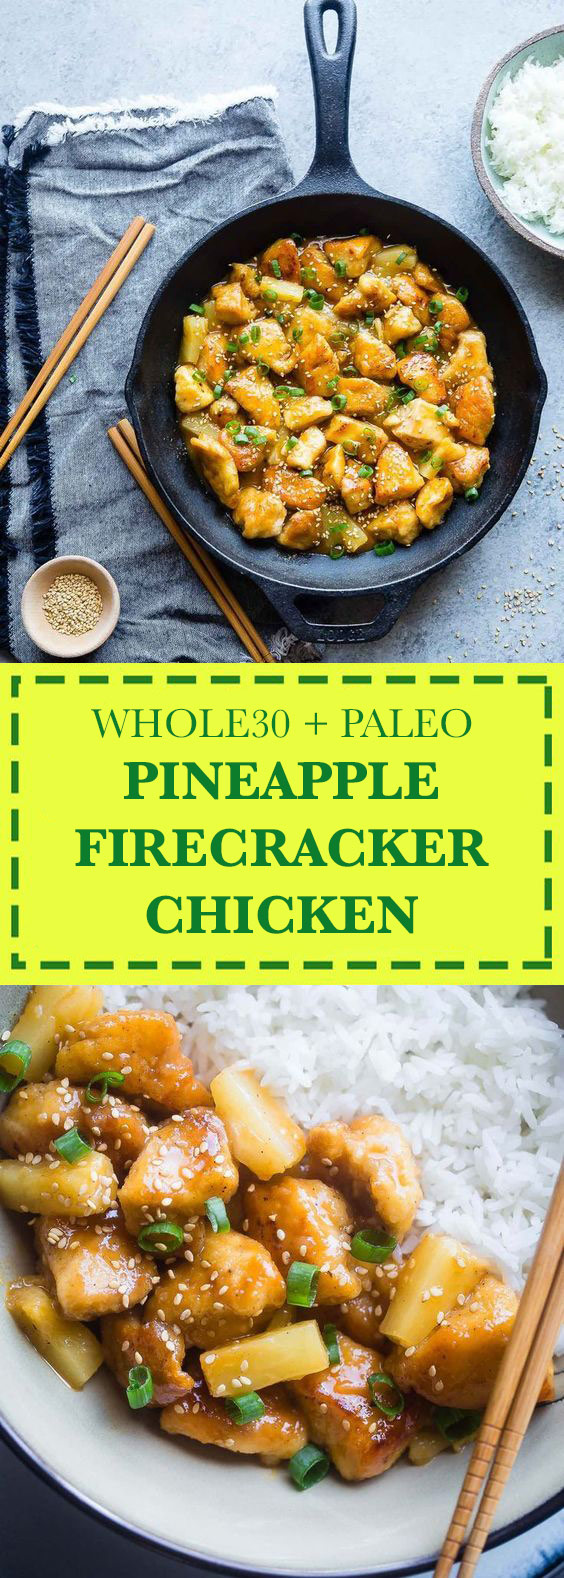 Whole30 + Paleo Pineapple Firecracker Chicken